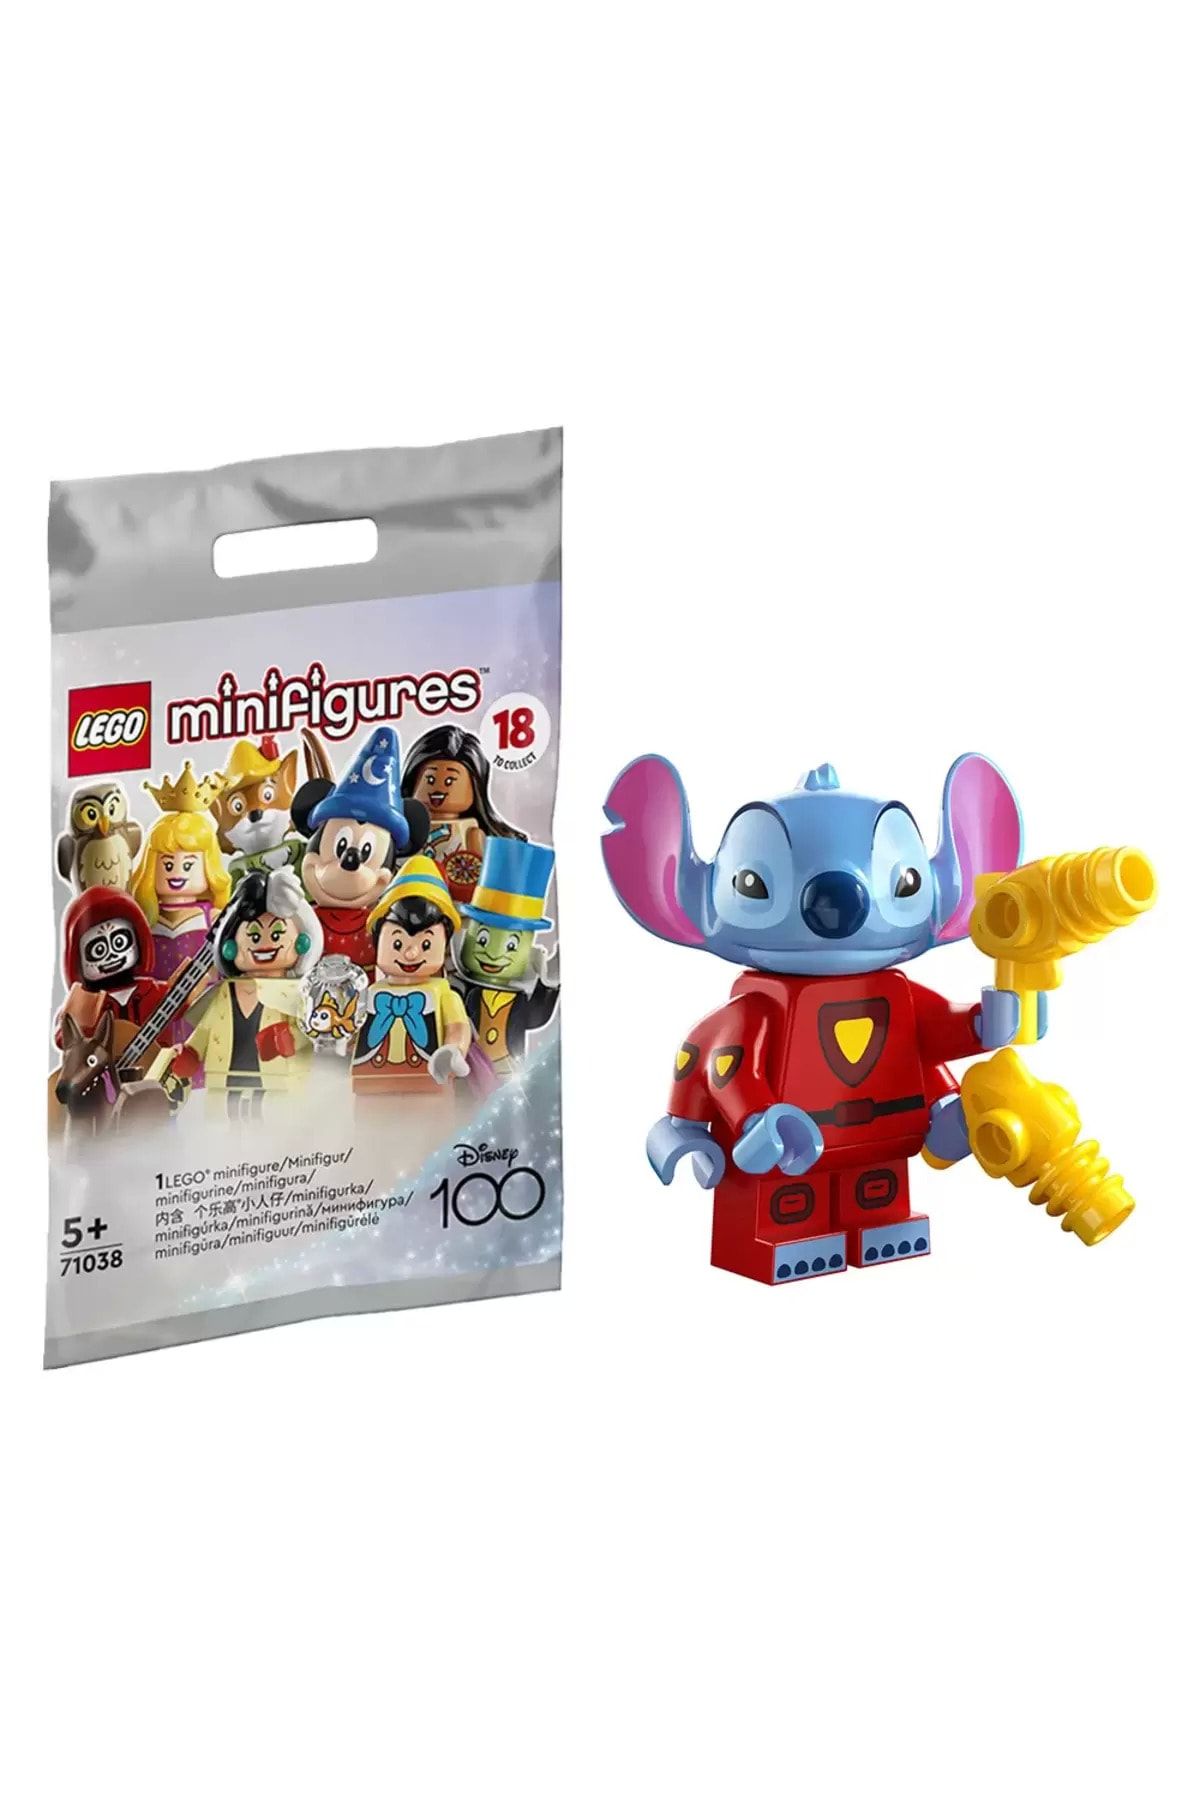 71012 LEGO Disney Minifigure Series 1 Stitch DIS001 Minifigure